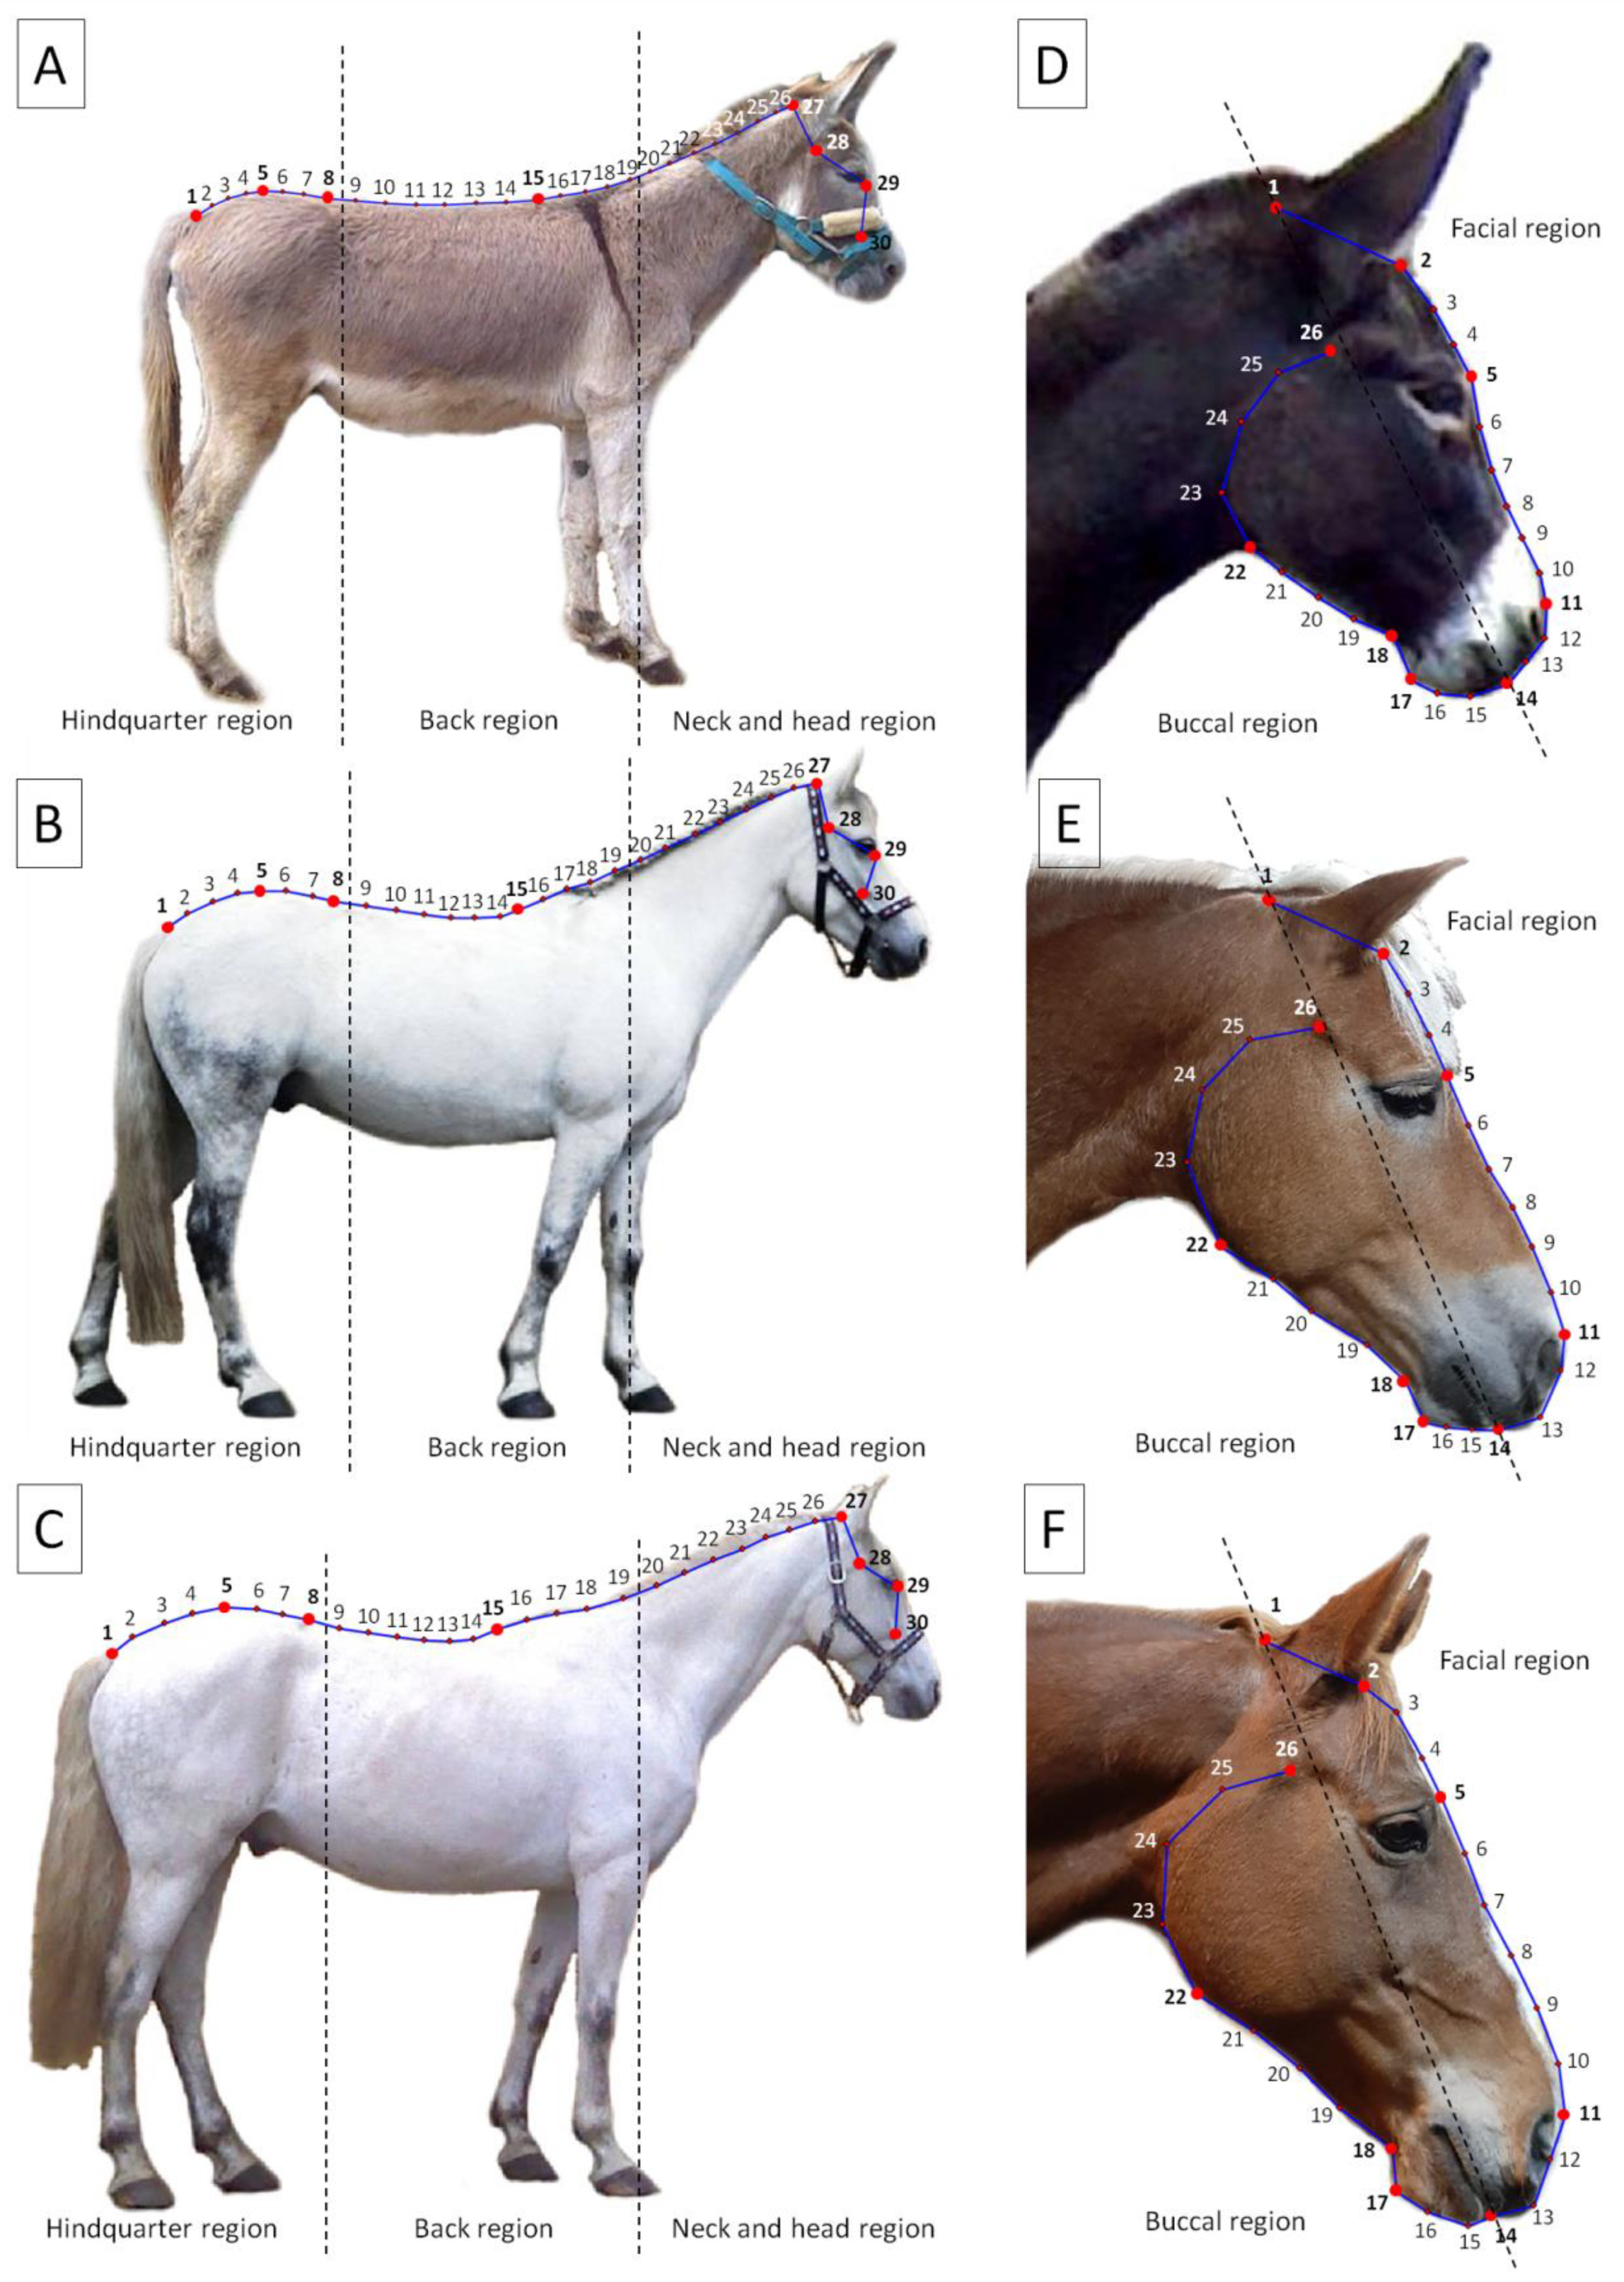 Similarities Between Donkeys And Horses